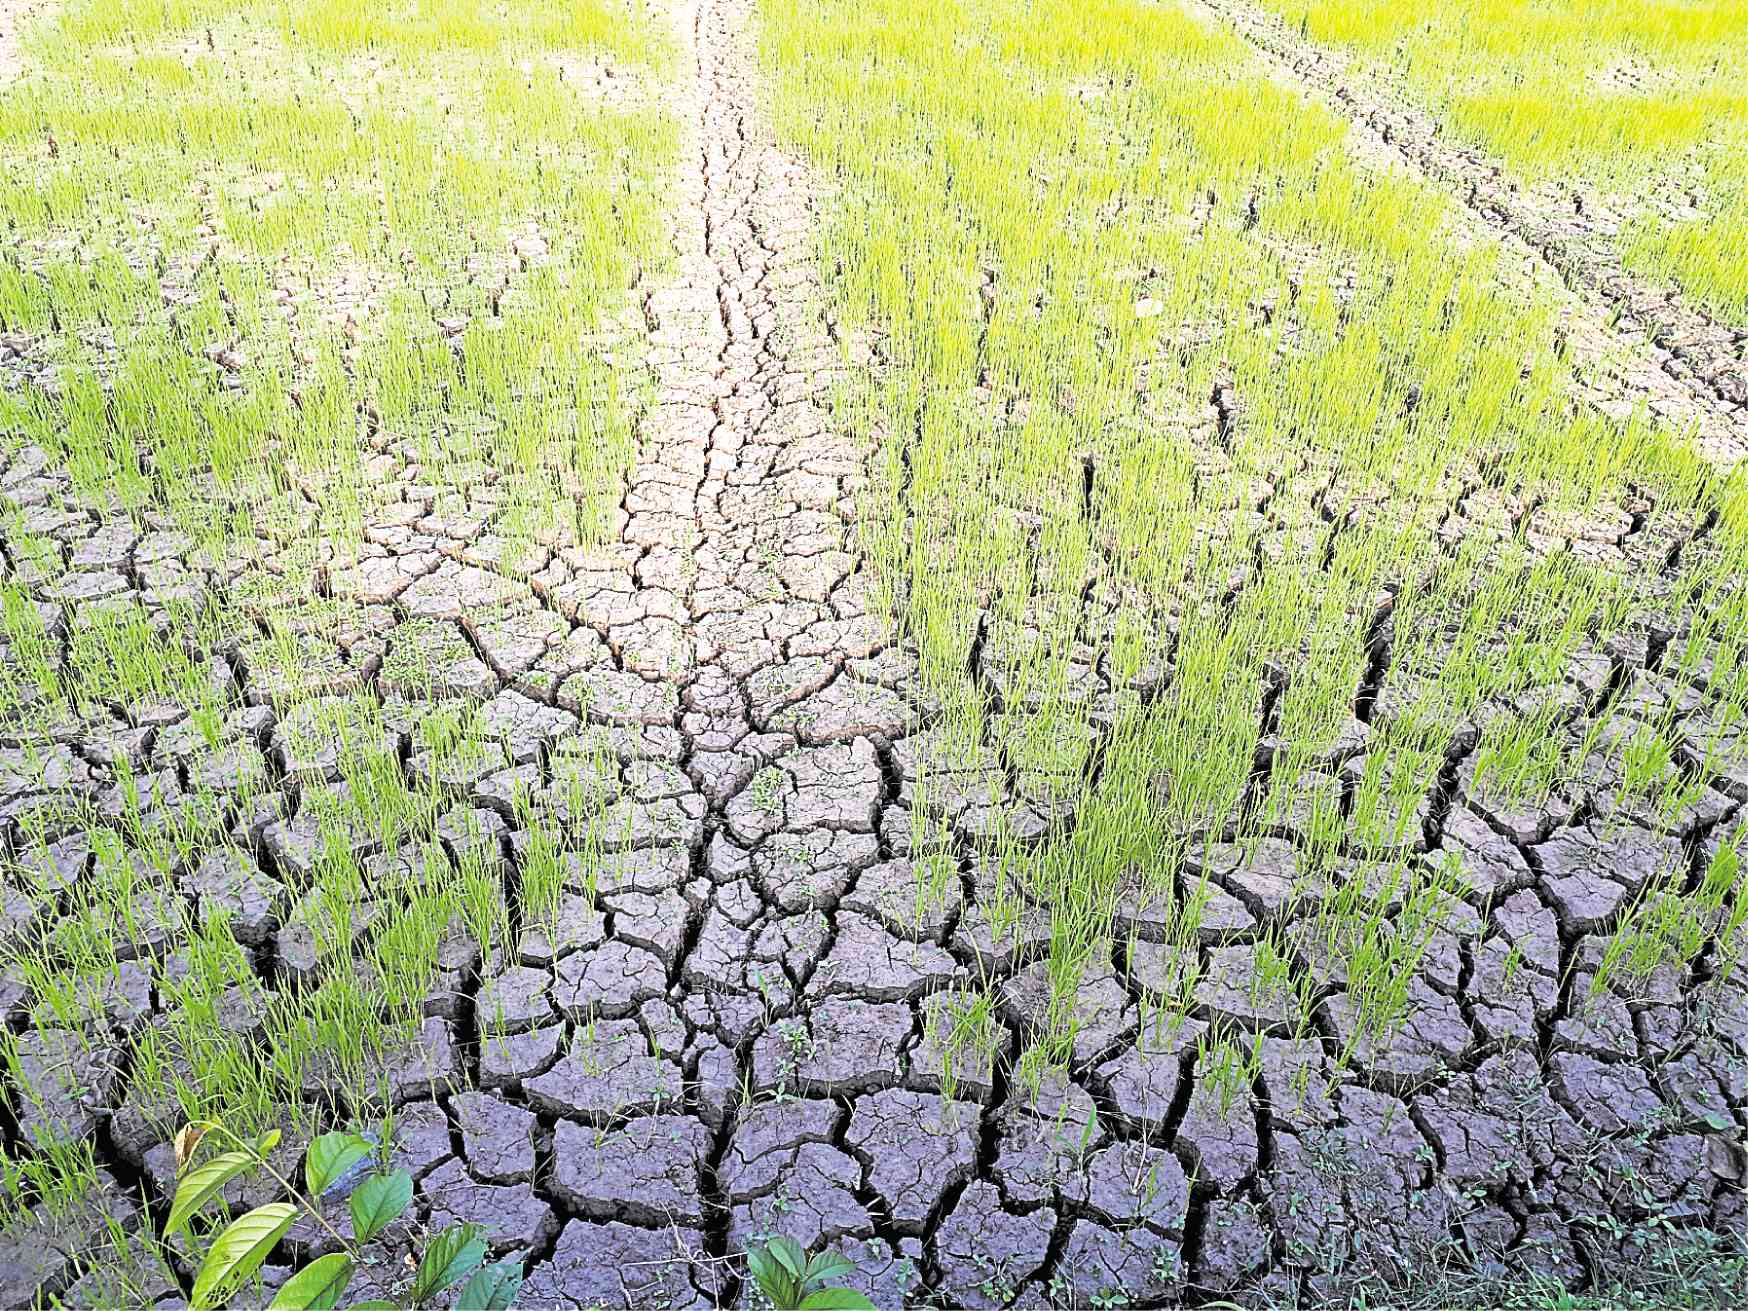 Dry spell brings farm losses to P2.8 billion